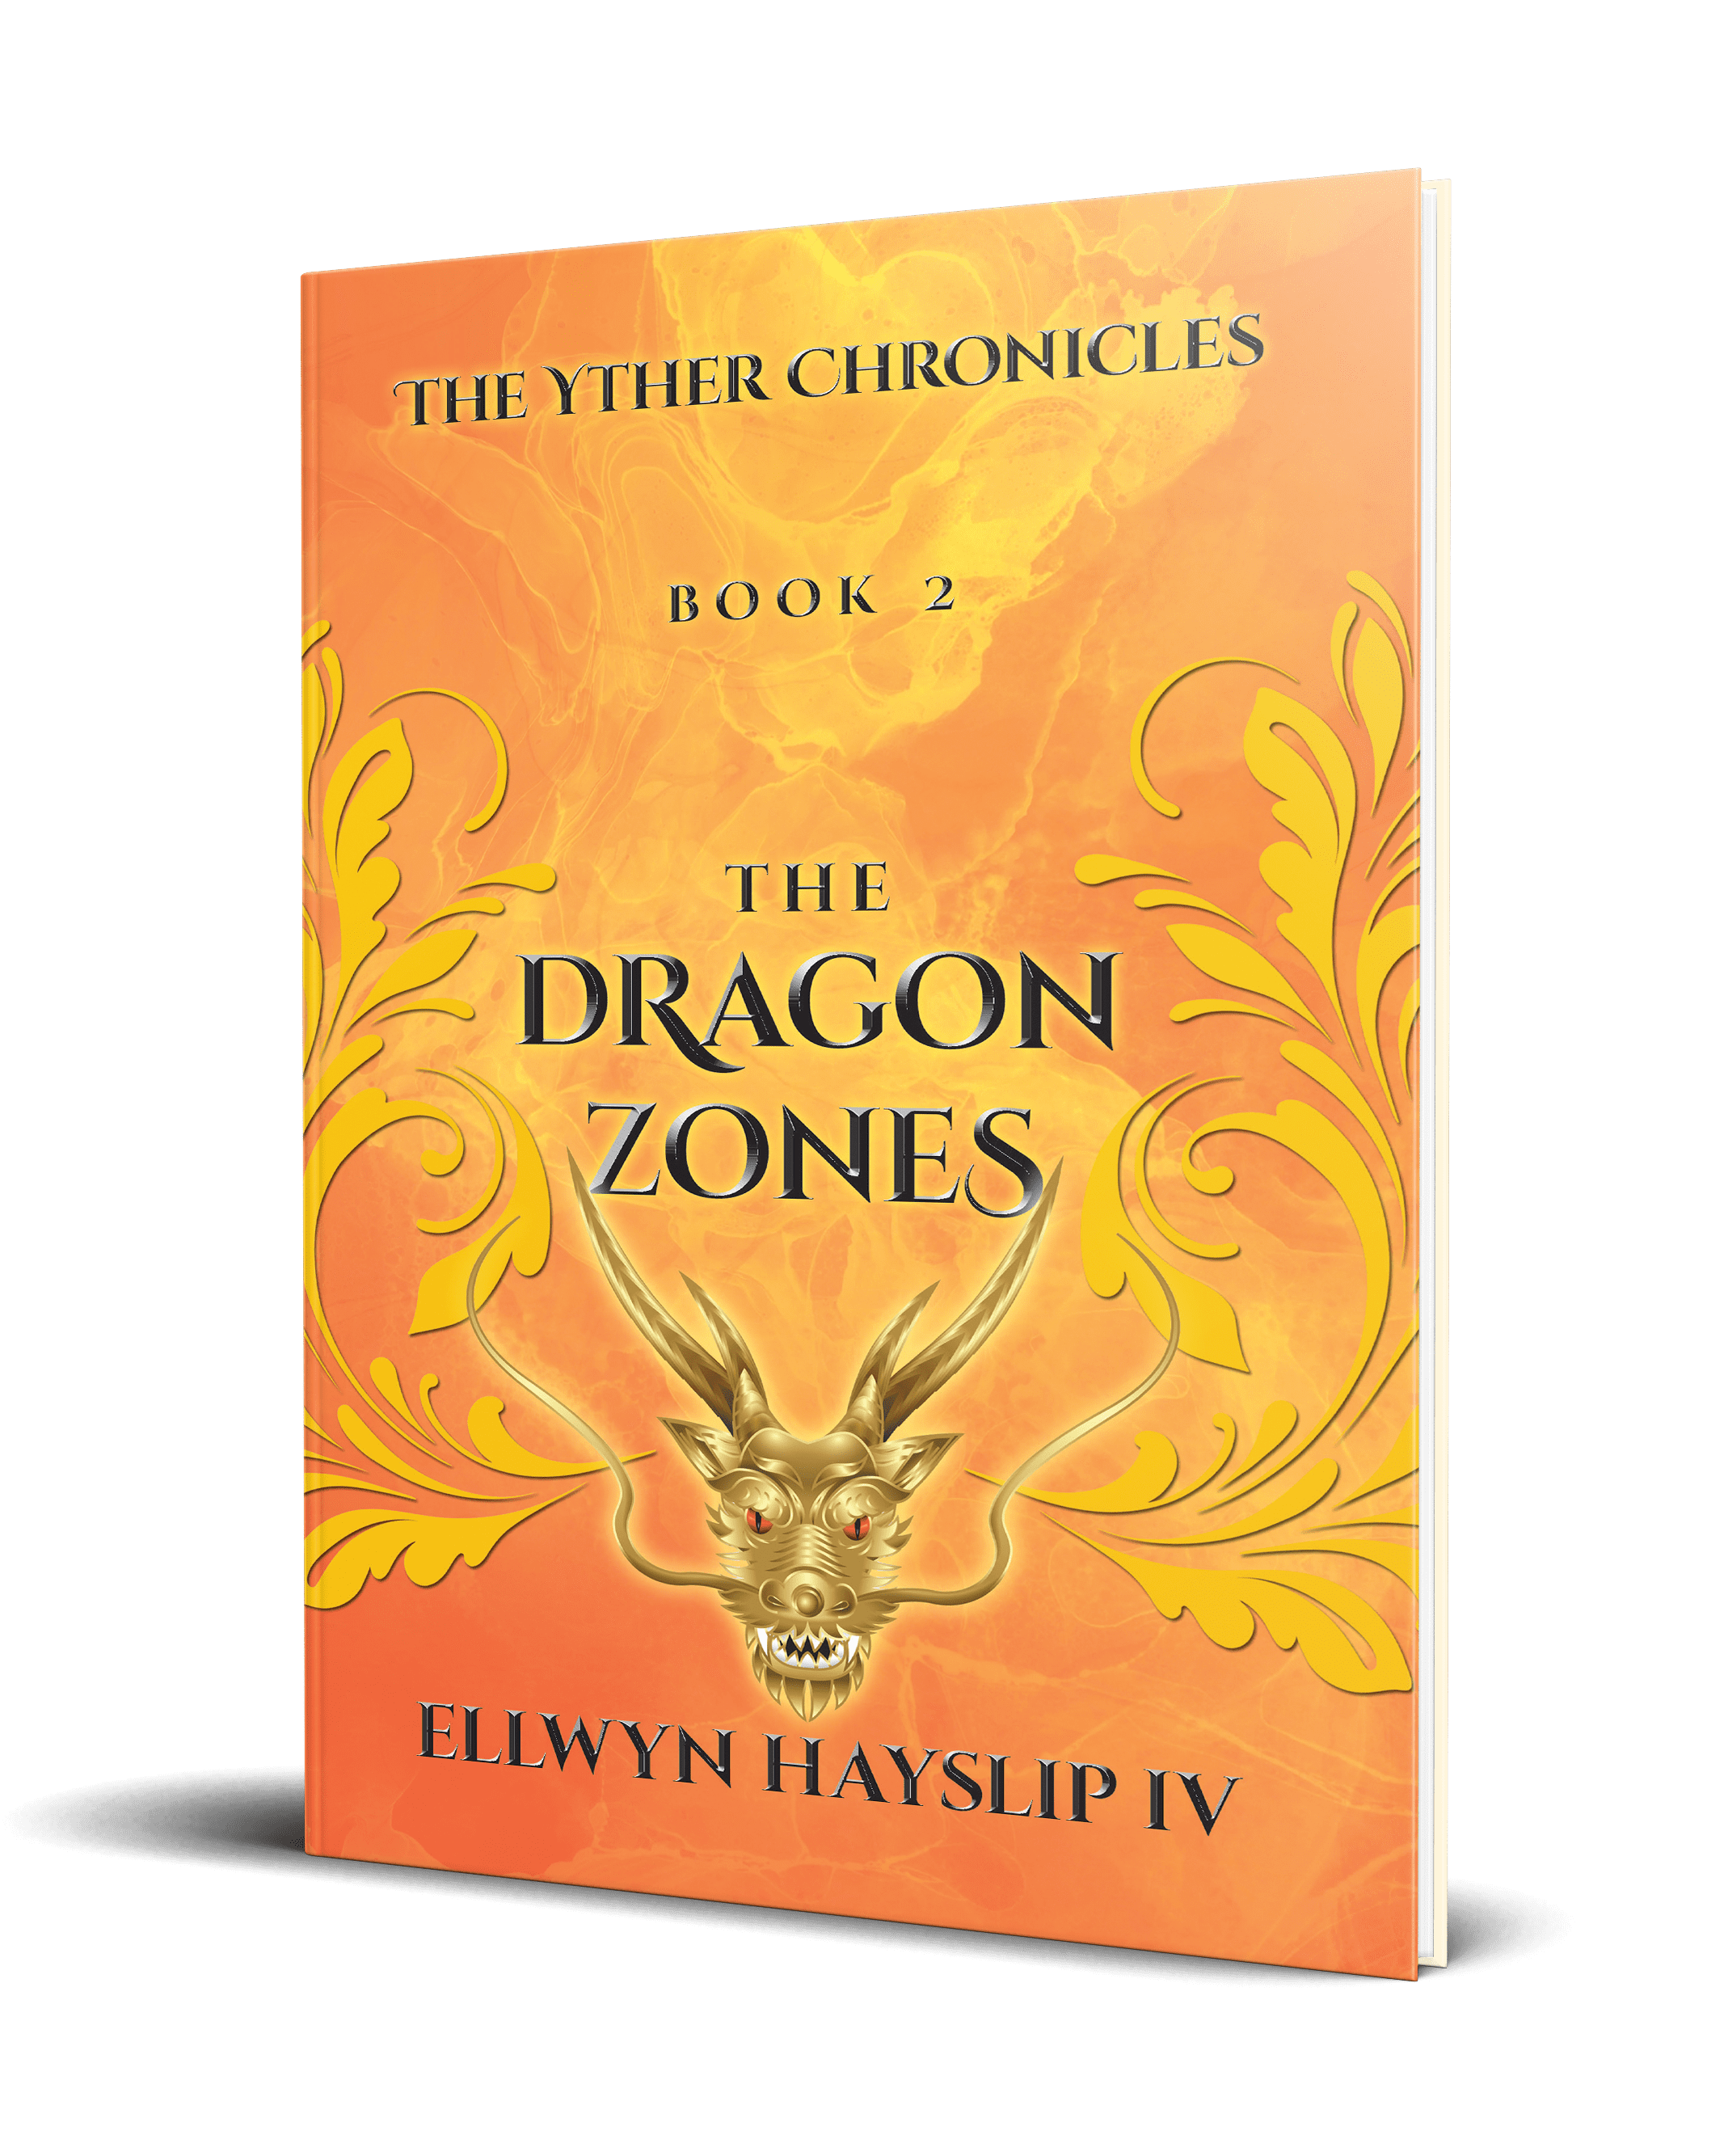 The Yther Chronicles "The Dragon Zones" by Ellwyn Hayslip IV